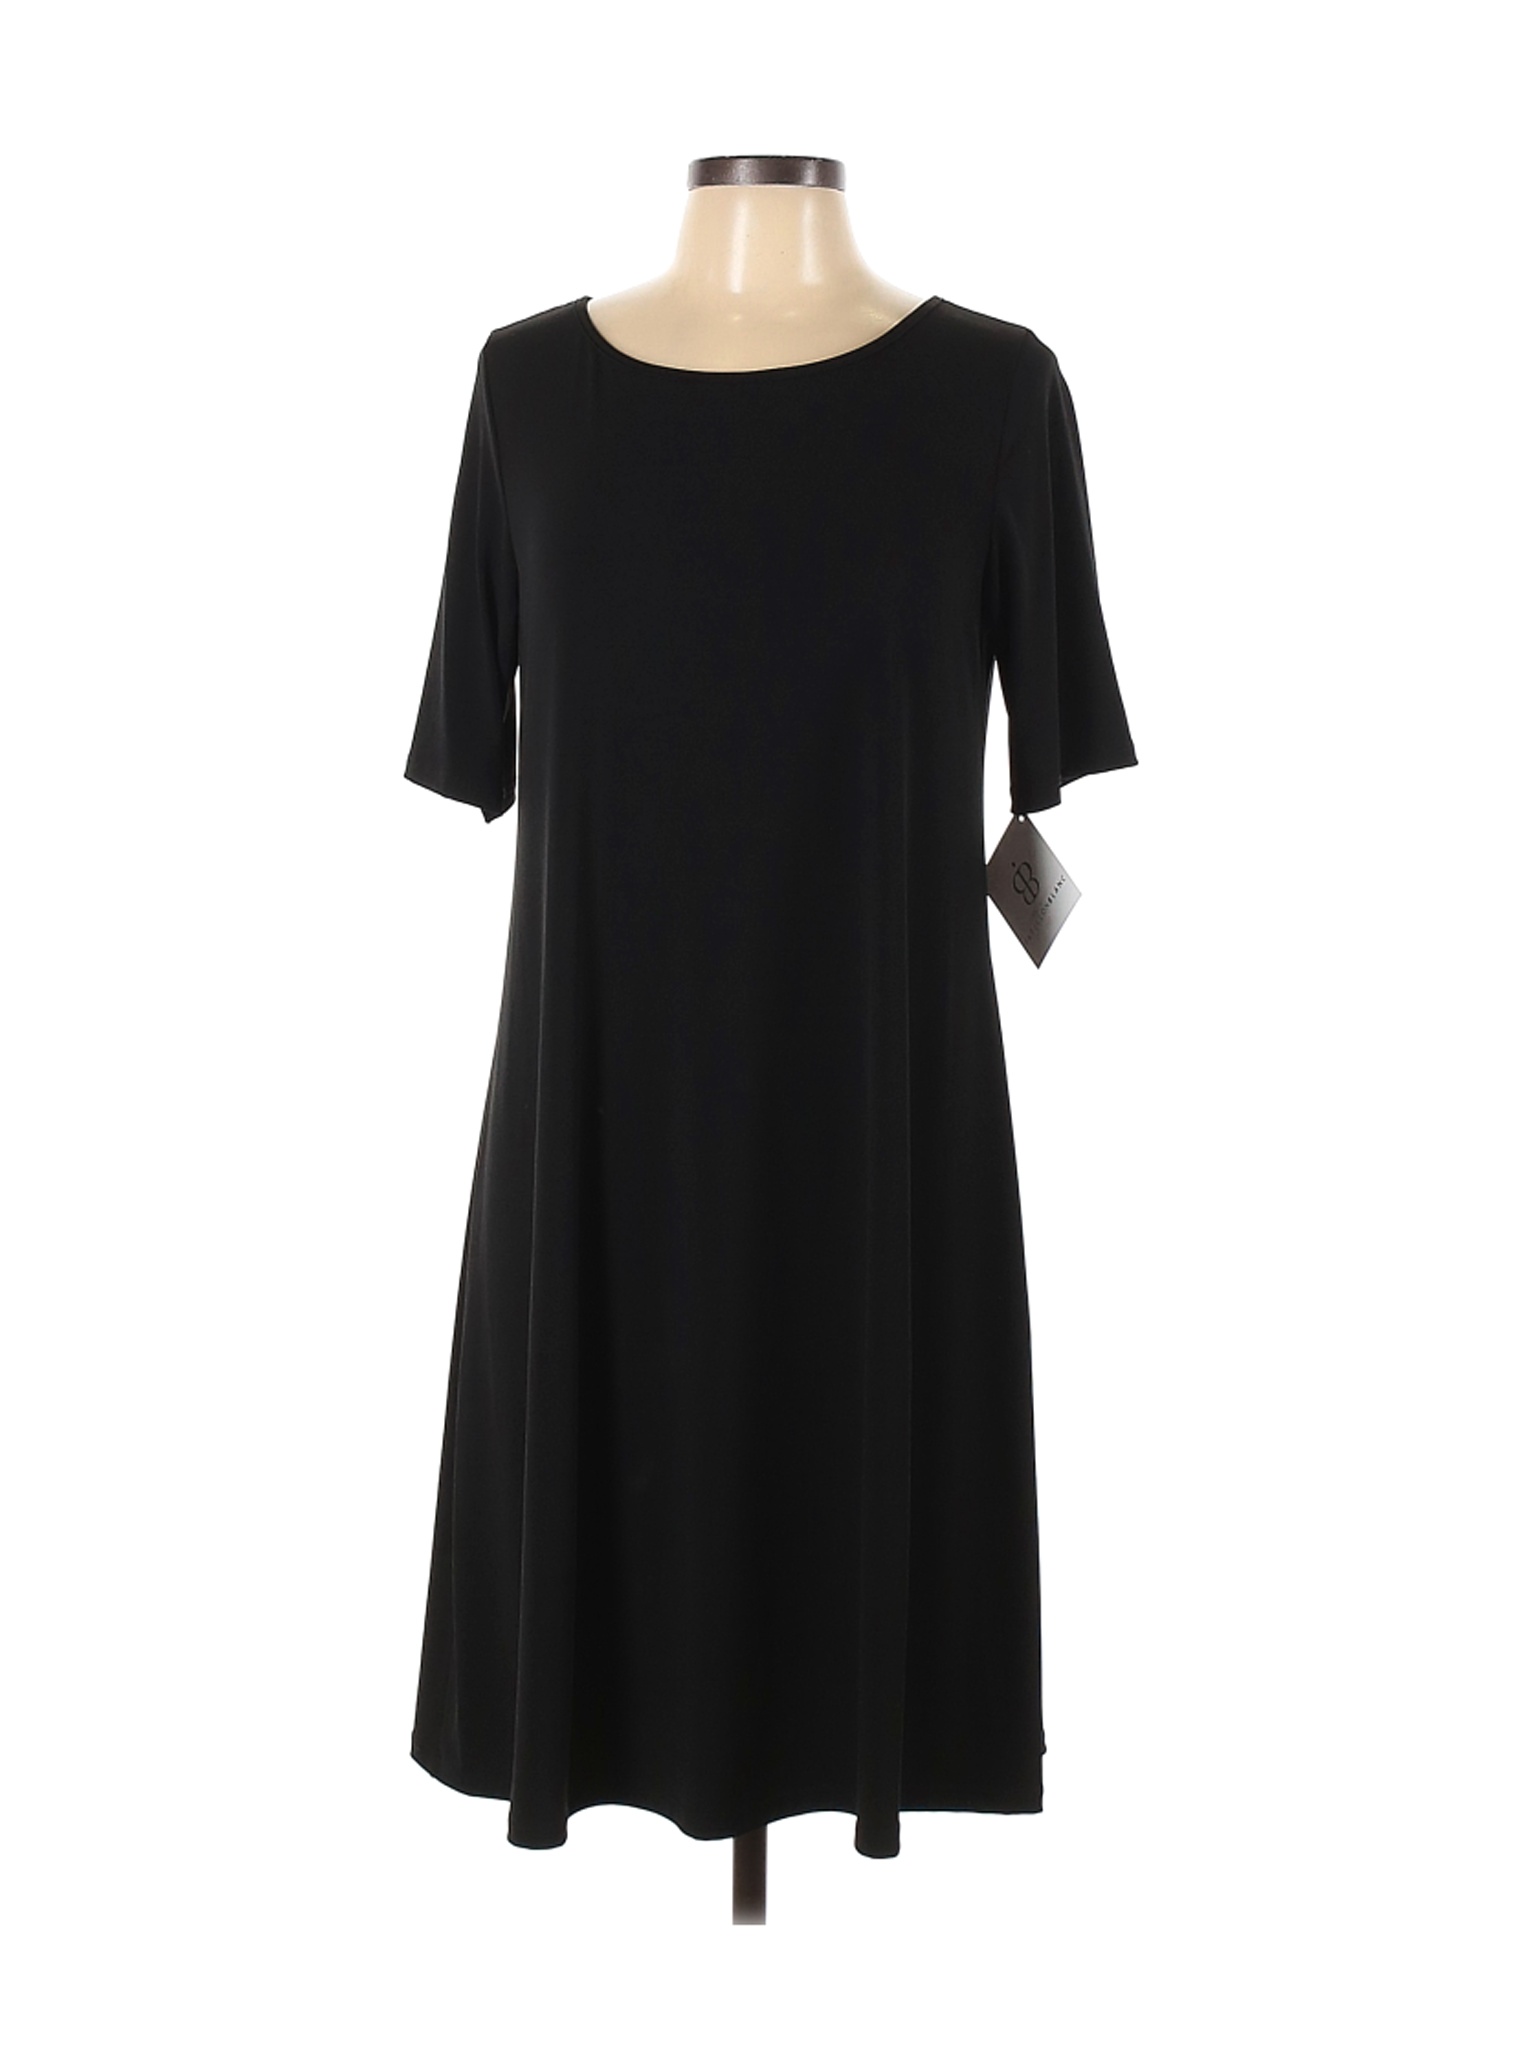 NWT Papillon Blanc Women Black Casual Dress L | eBay